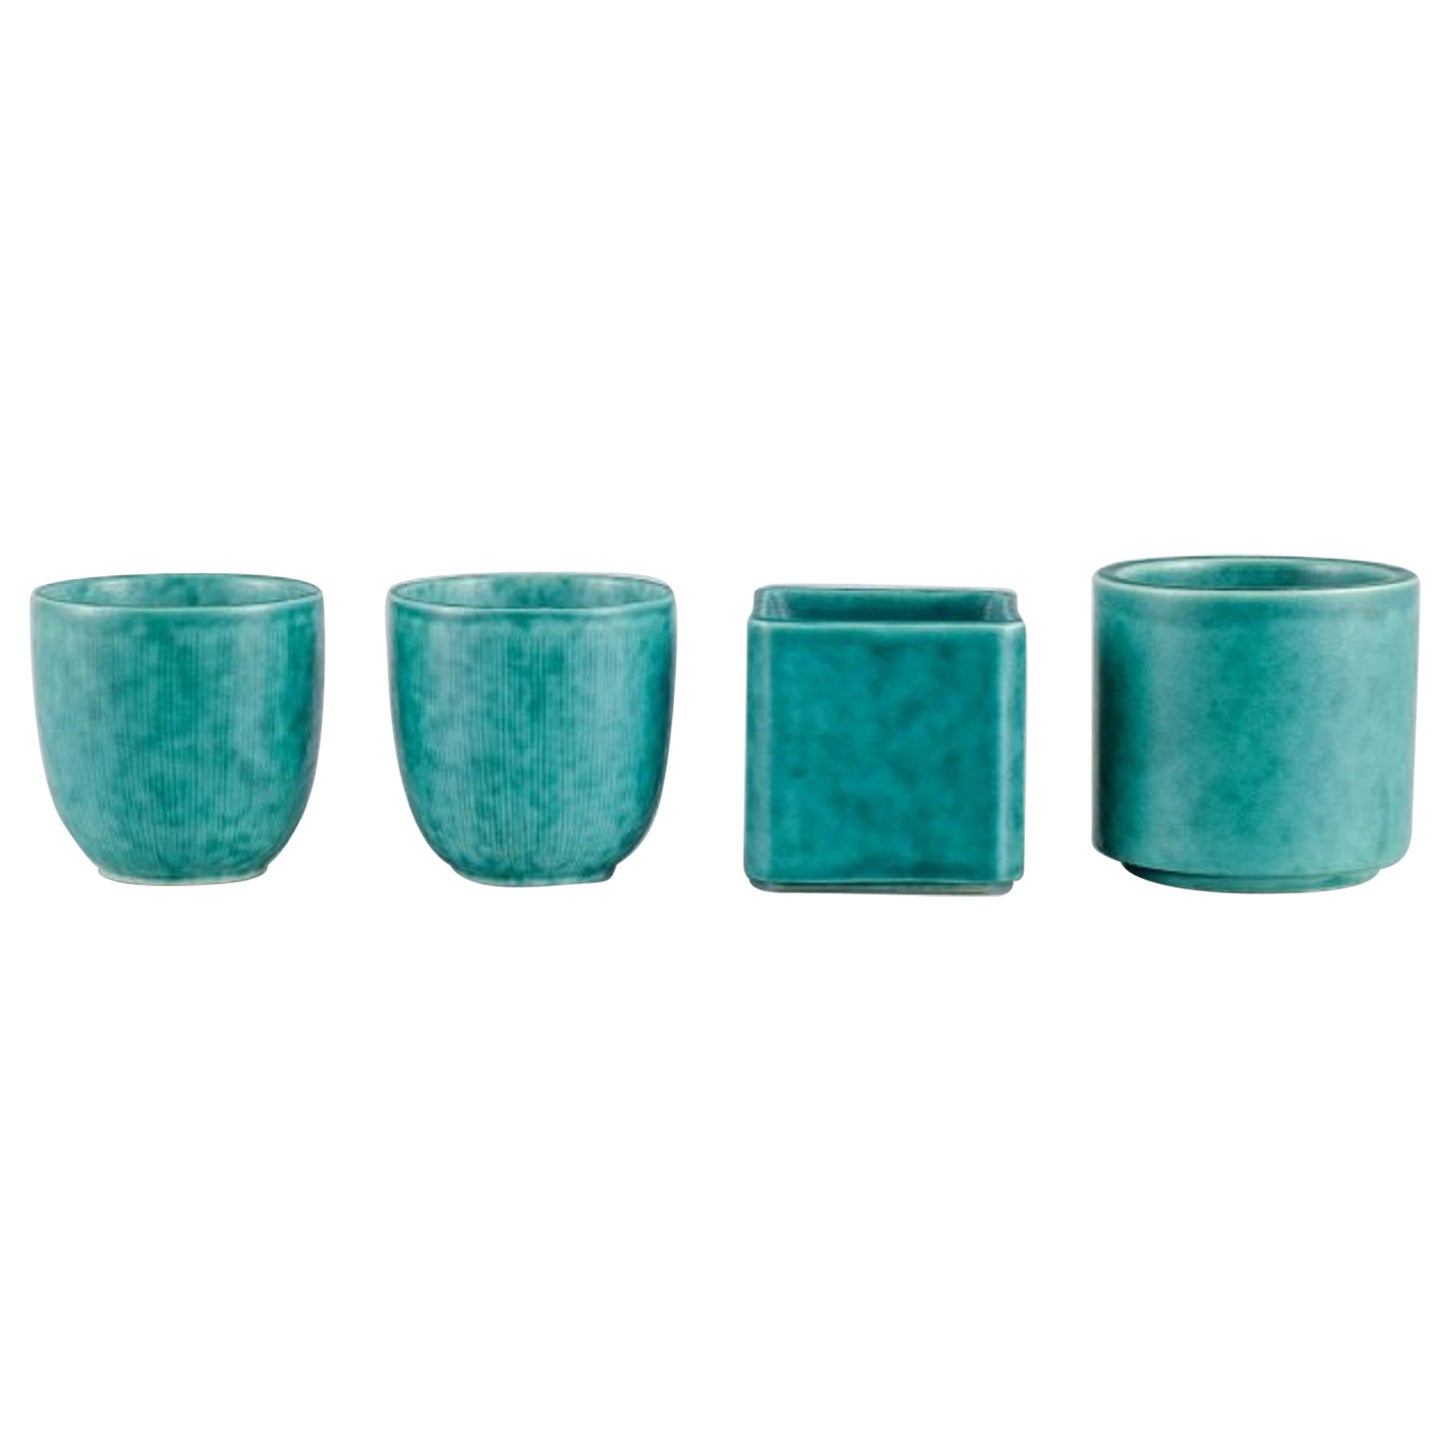 Wilhelm Kåge for Gustavsberg. Four Argenta Art Deco vases in glazed ceramics. For Sale